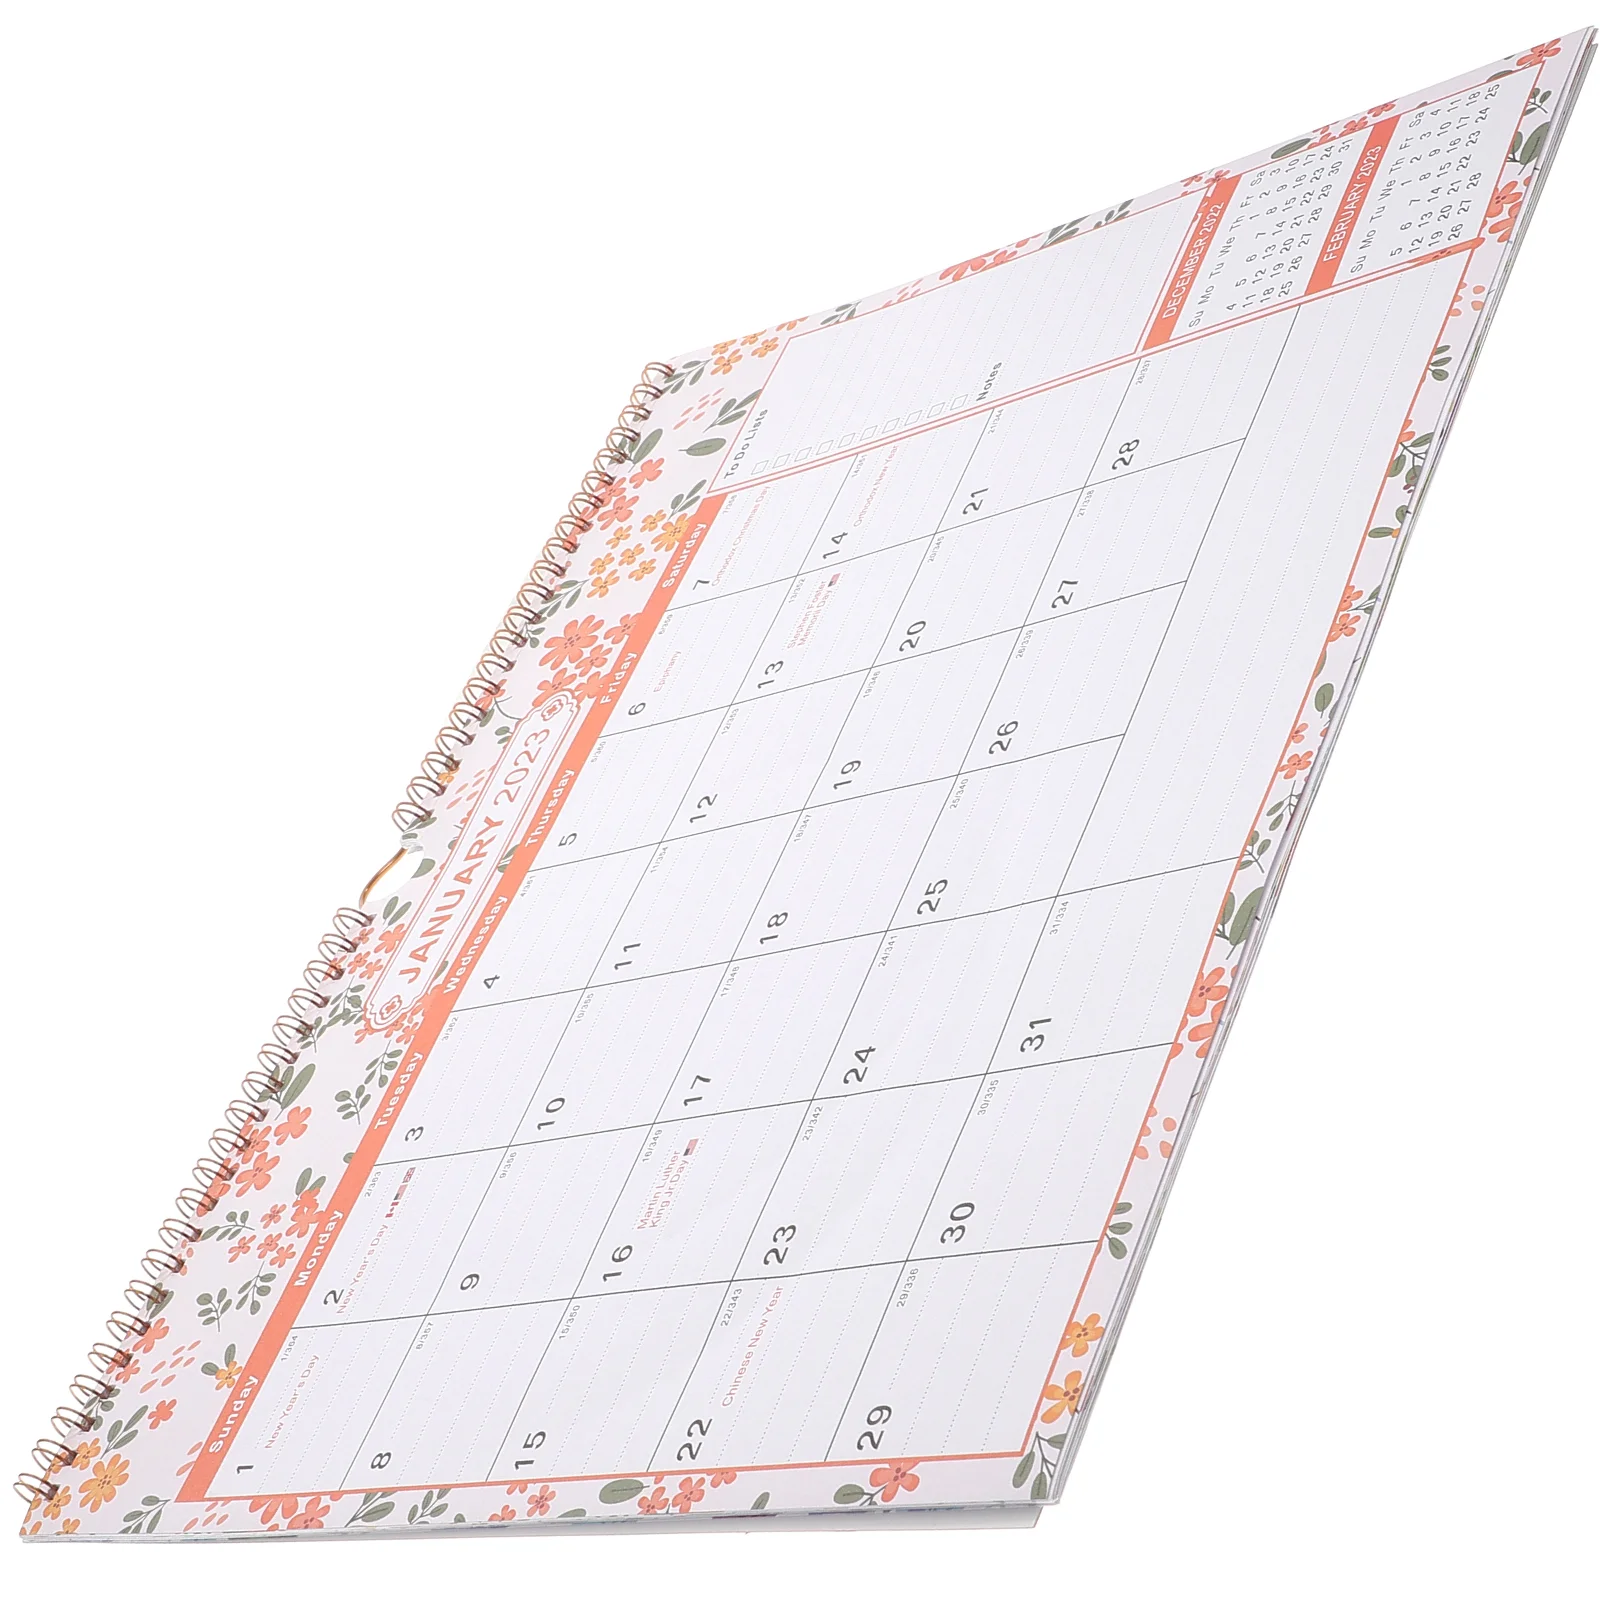 Bunny Decor Decorative Calendar Planner Hanging Paper Calendar Schedule Calendar 2023 2023 Calendar 2023 Wall Calendar